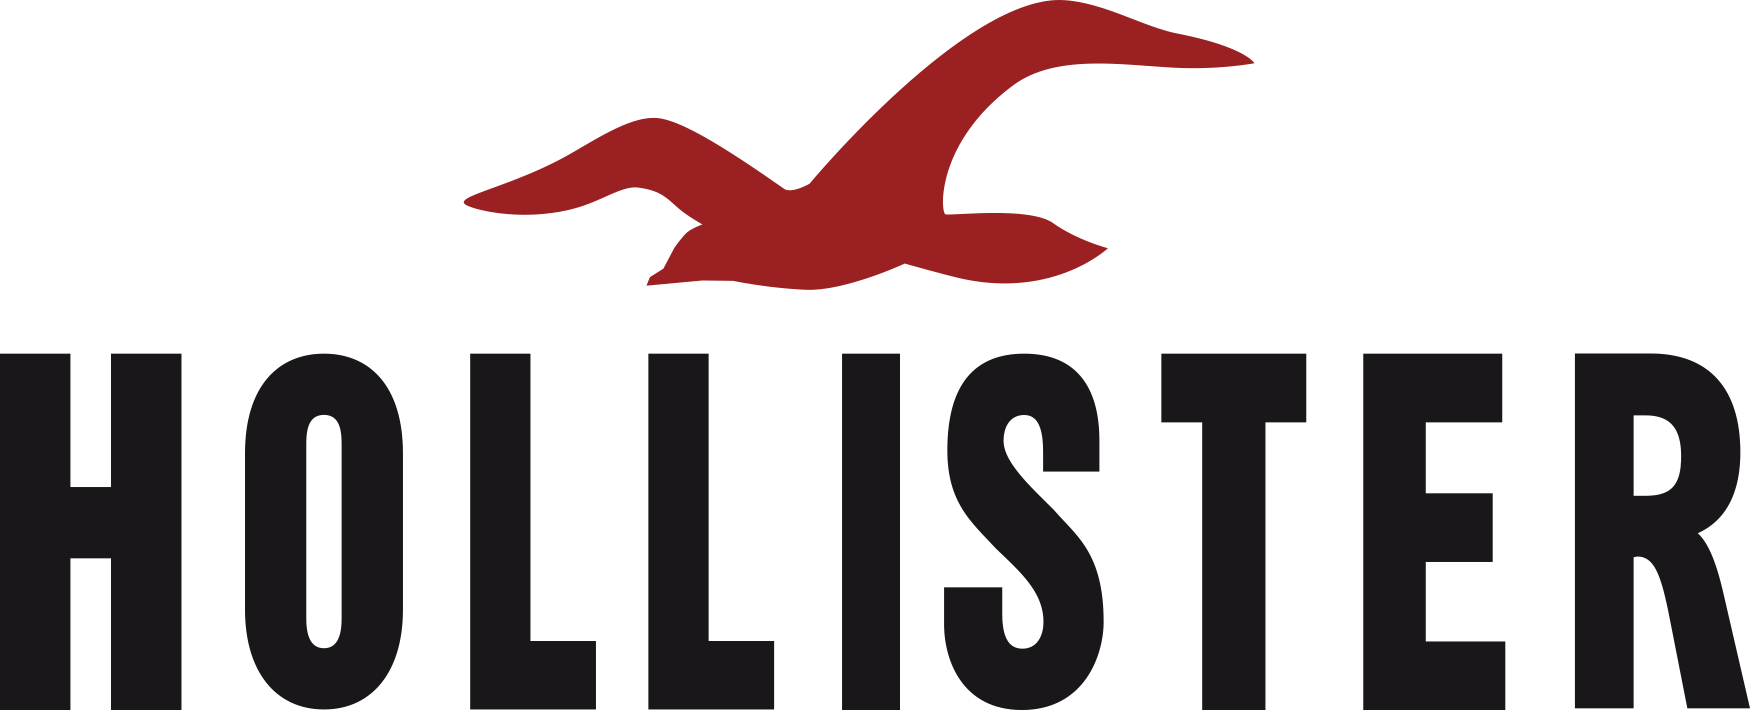 Hollister-logo